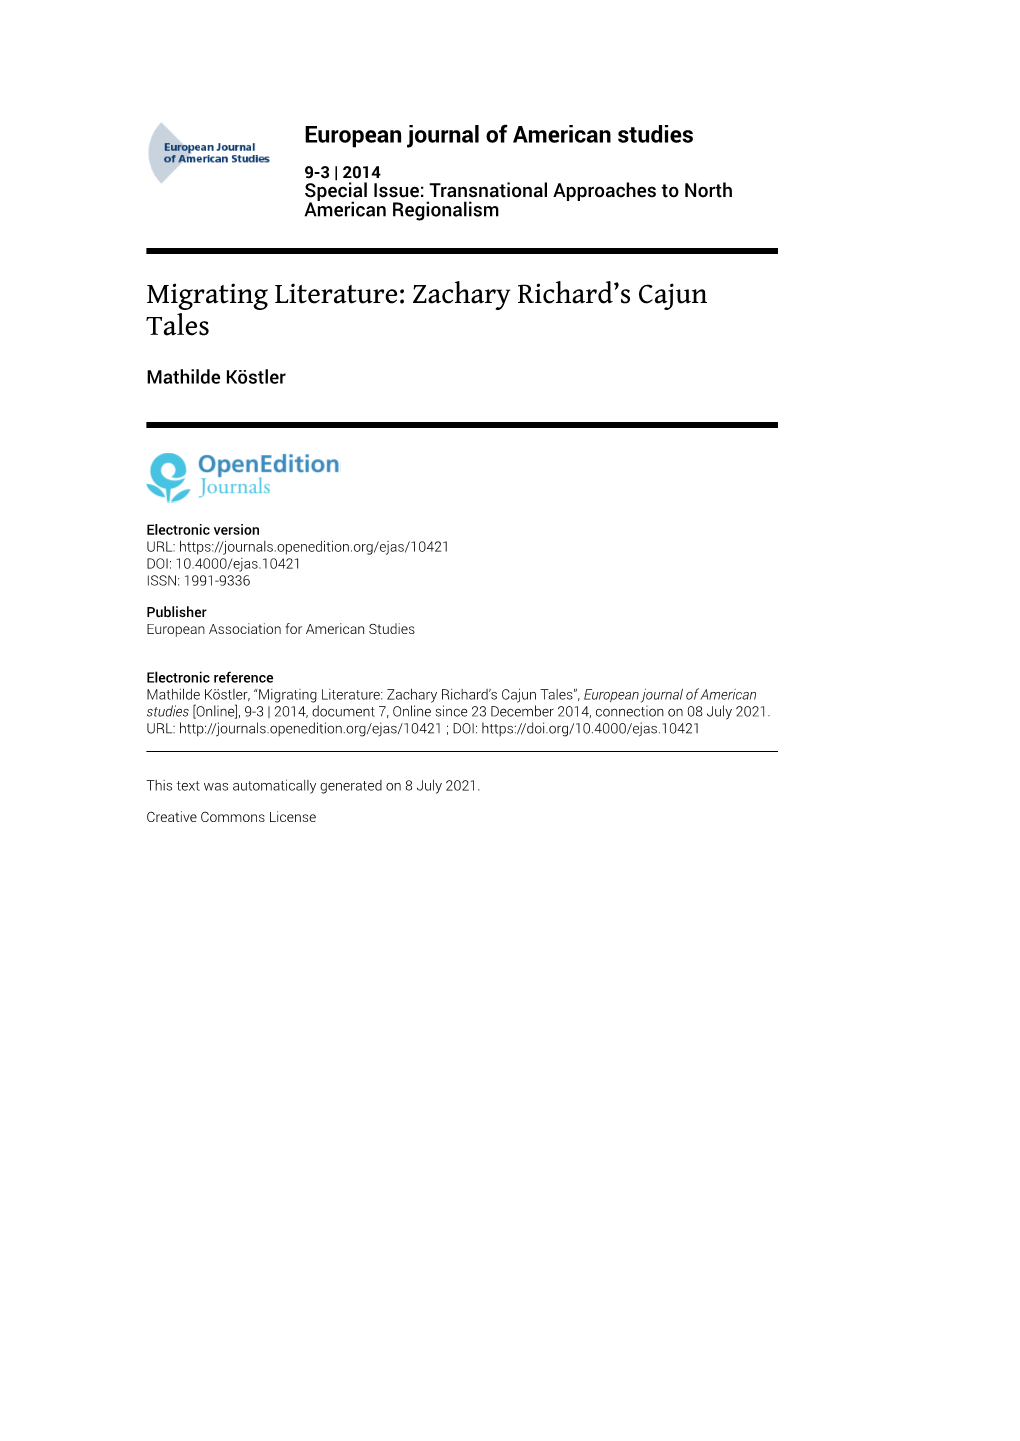 European Journal of American Studies, 9-3 | 2014 Migrating Literature: Zachary Richard’S Cajun Tales 2